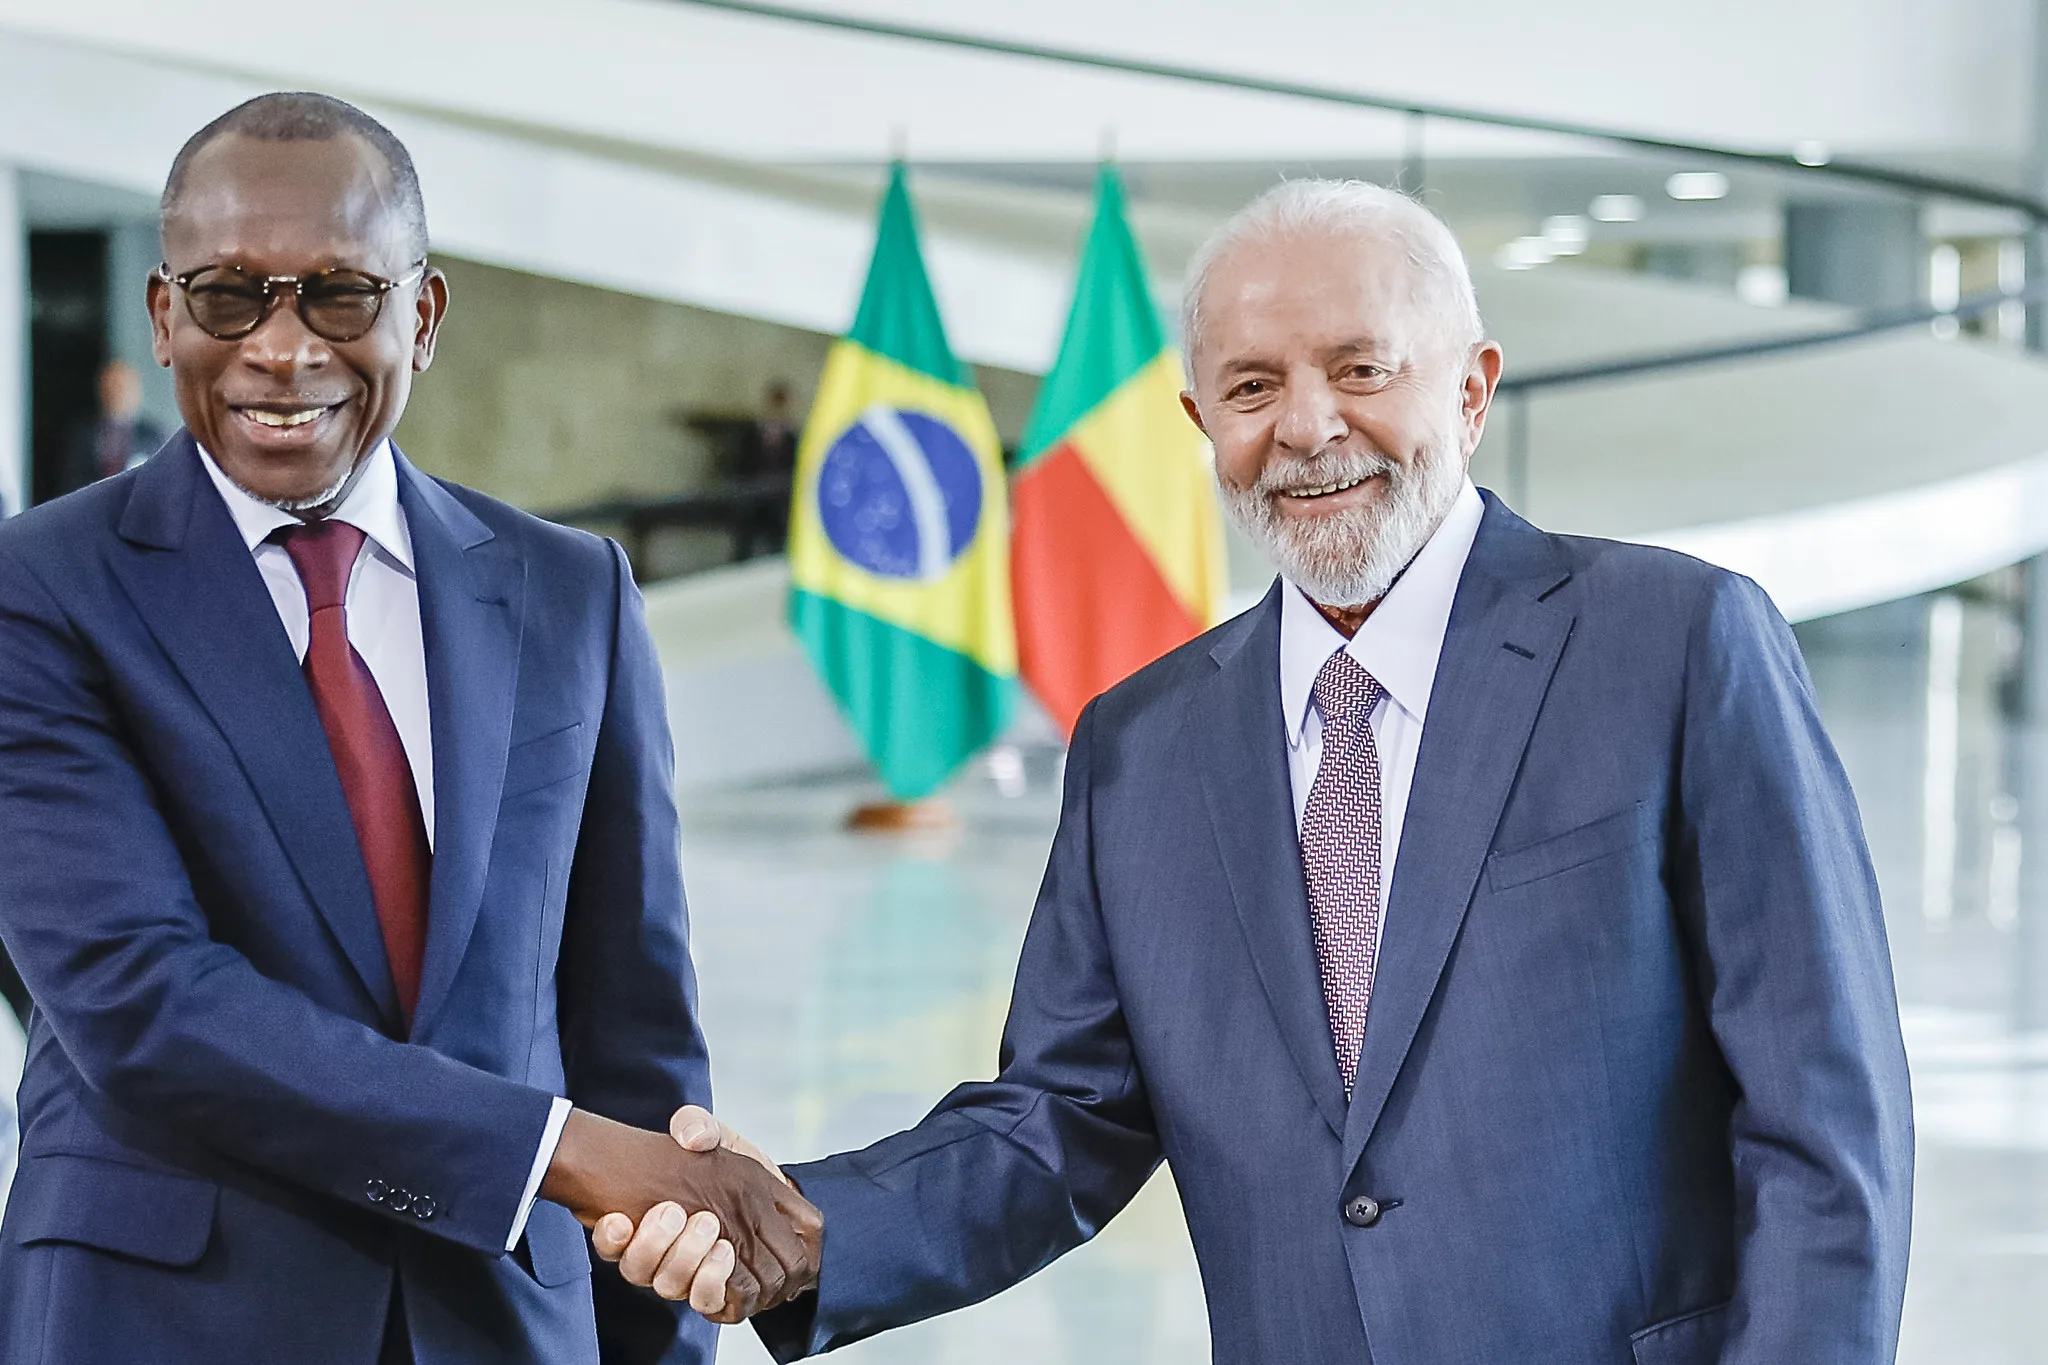 “Somos parceiros naturais da África”, diz Lula ao receber presidente do Benin